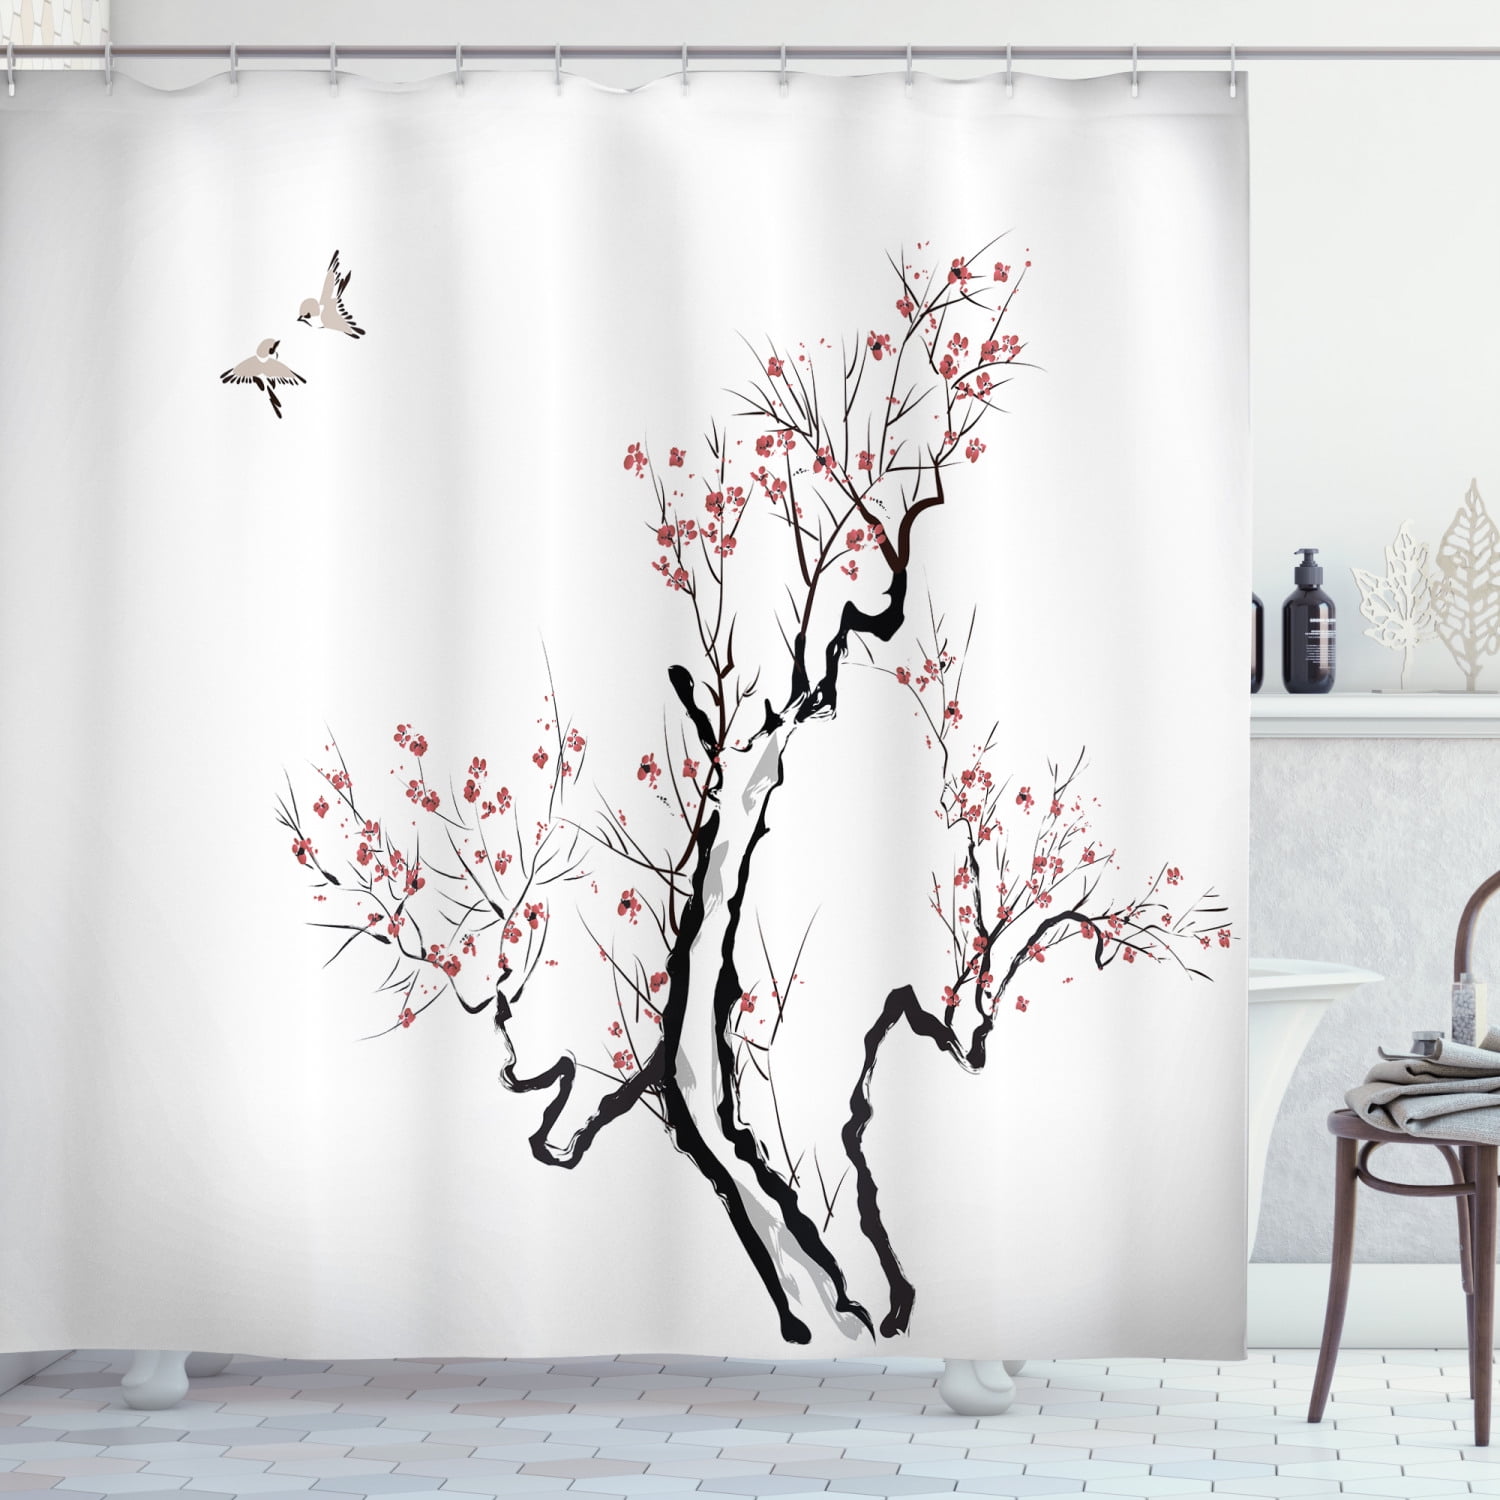 Flowers Tree Branches Sleeping Cat Shower Curtain Set Waterproof Fabric Hooks 